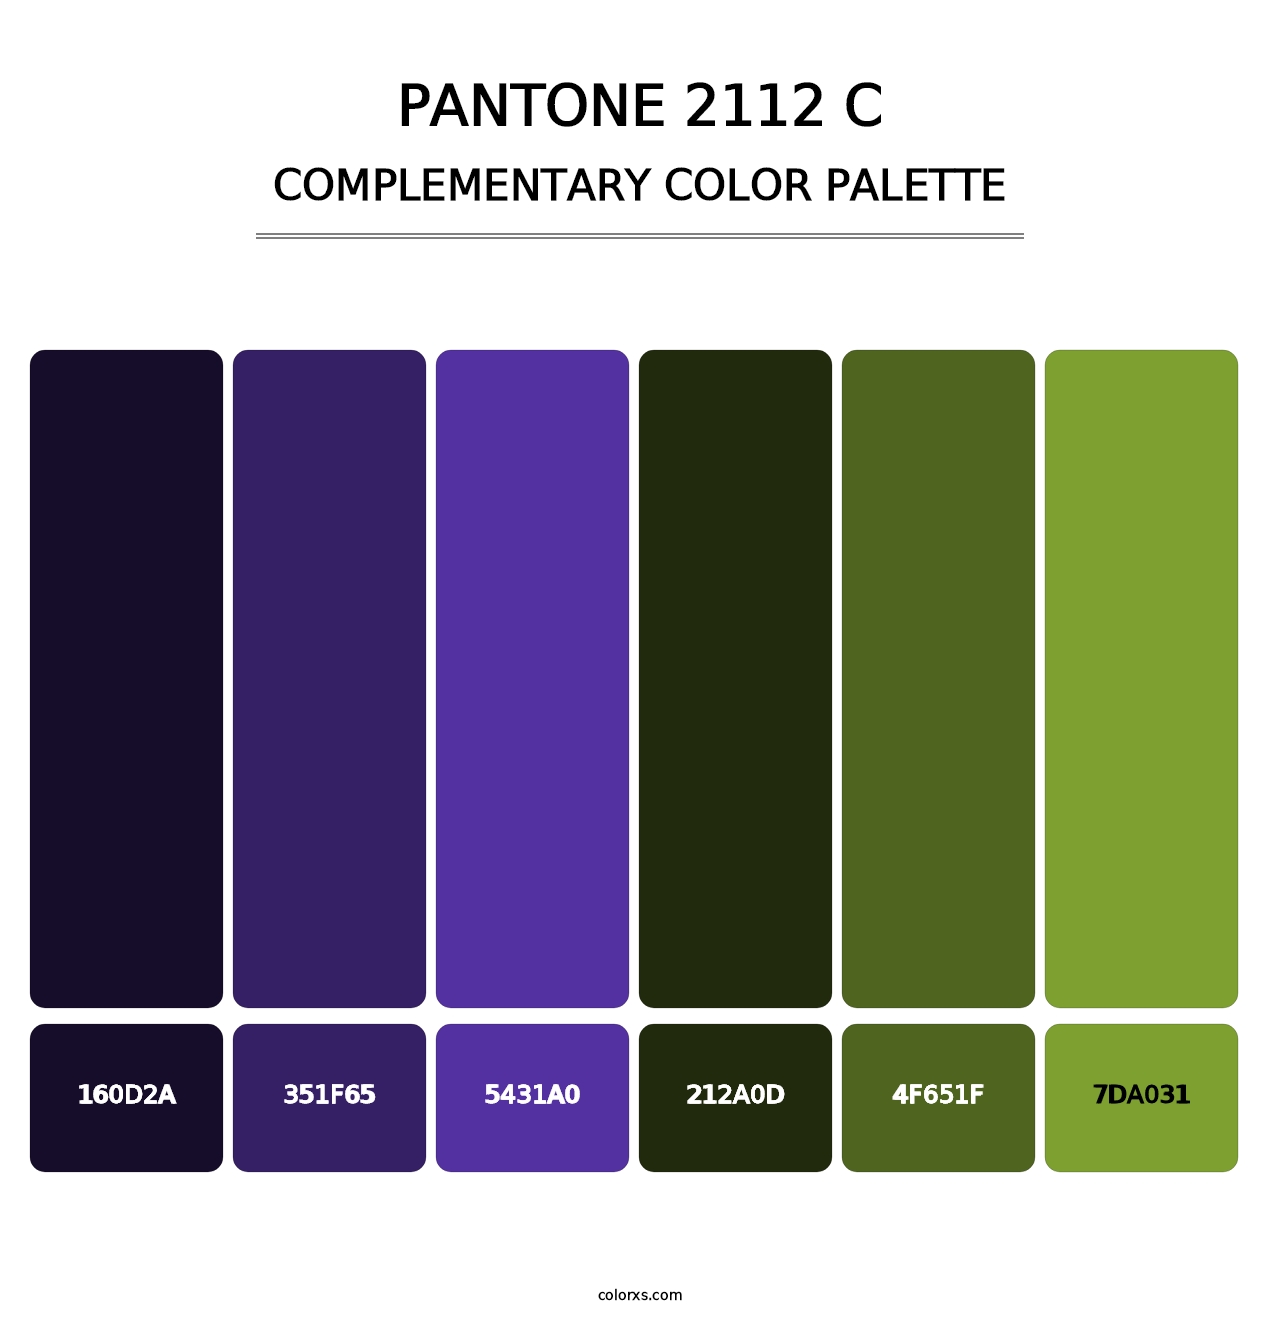 PANTONE 2112 C - Complementary Color Palette